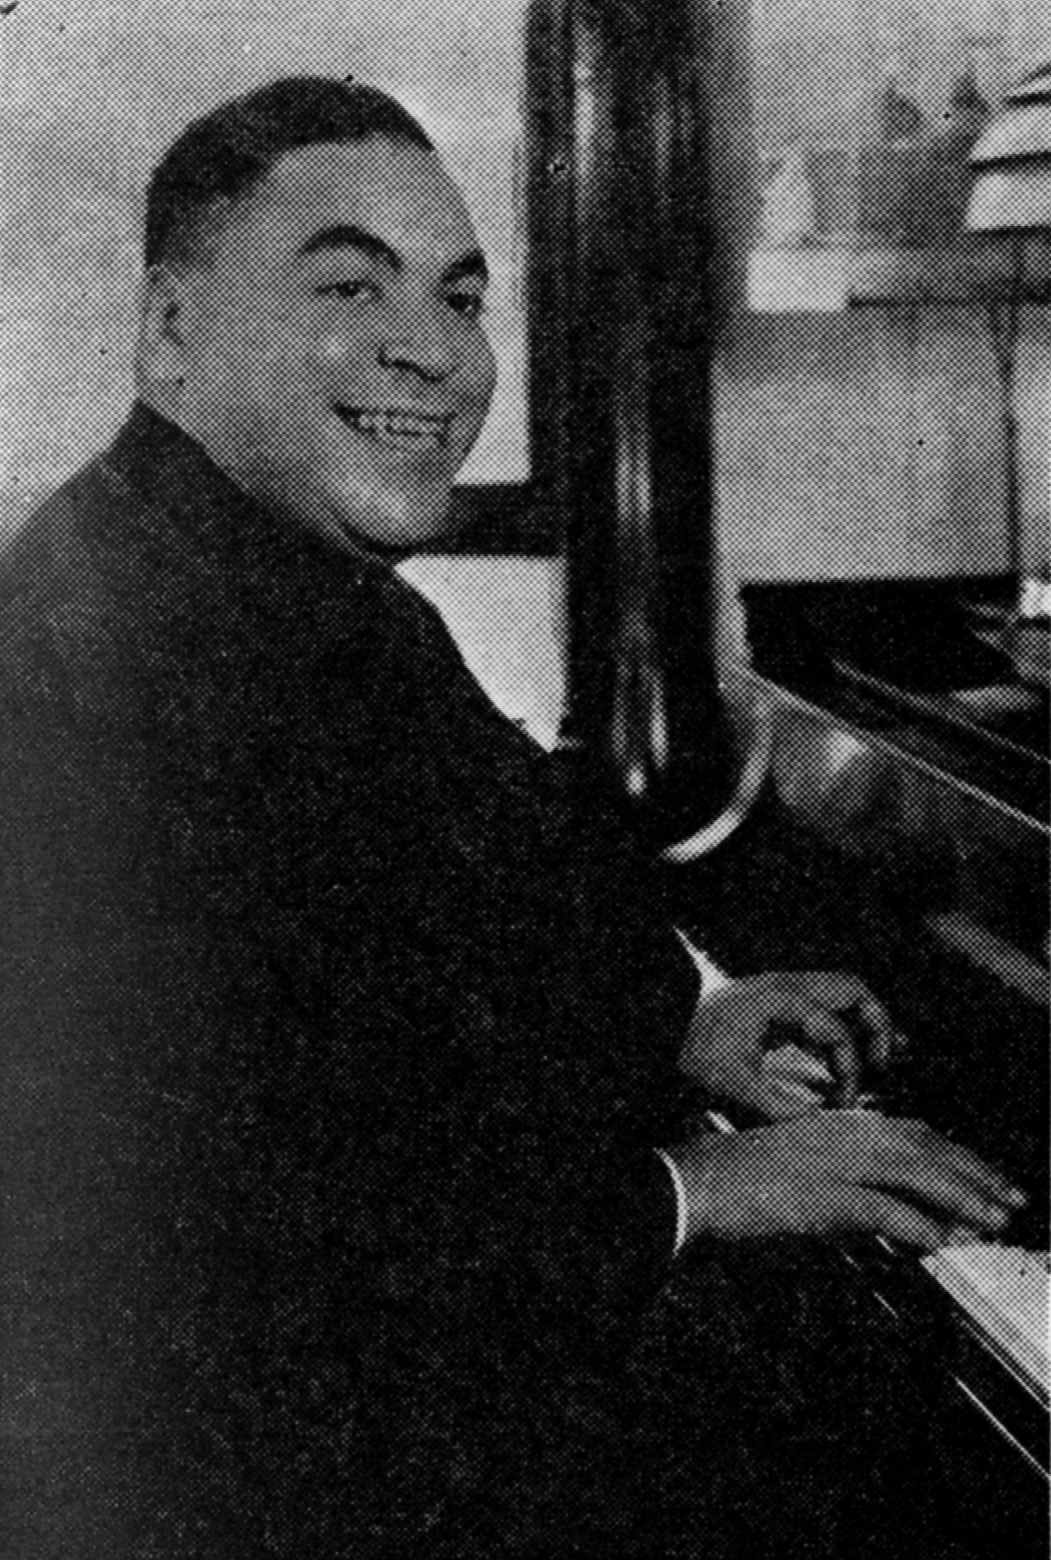 photograph of Fats Waller at the piano